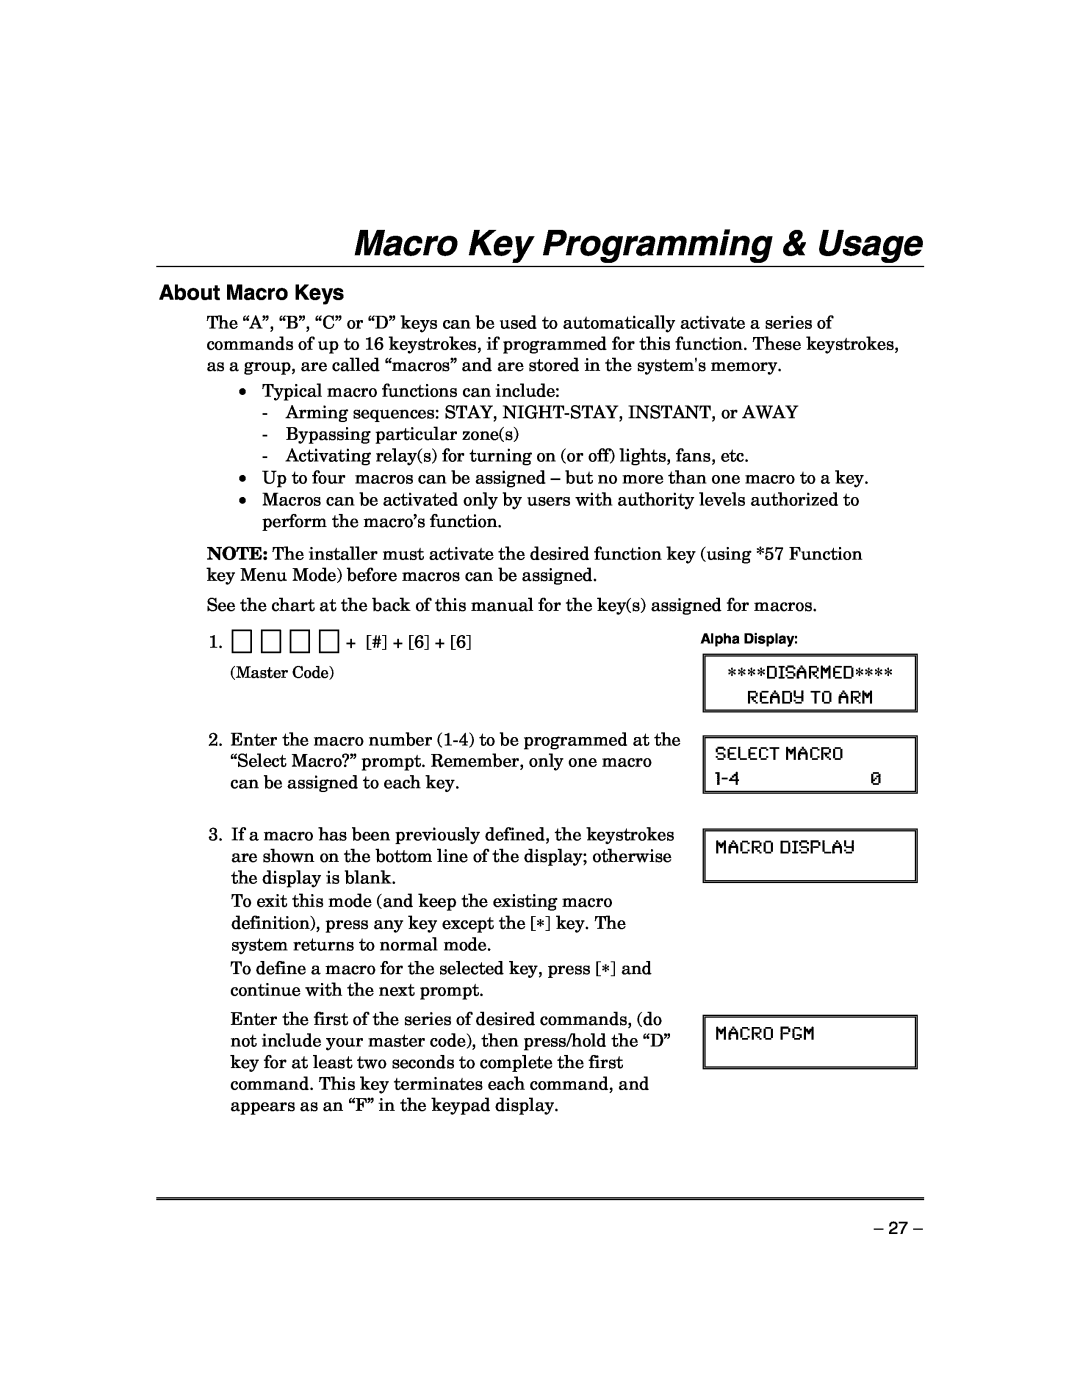 Honeywell VISTA-21IP manual Macro Key Programming & Usage, About Macro Keys, READY TO ARM SELECT MACRO 1-40 MACRO DISPLAY 